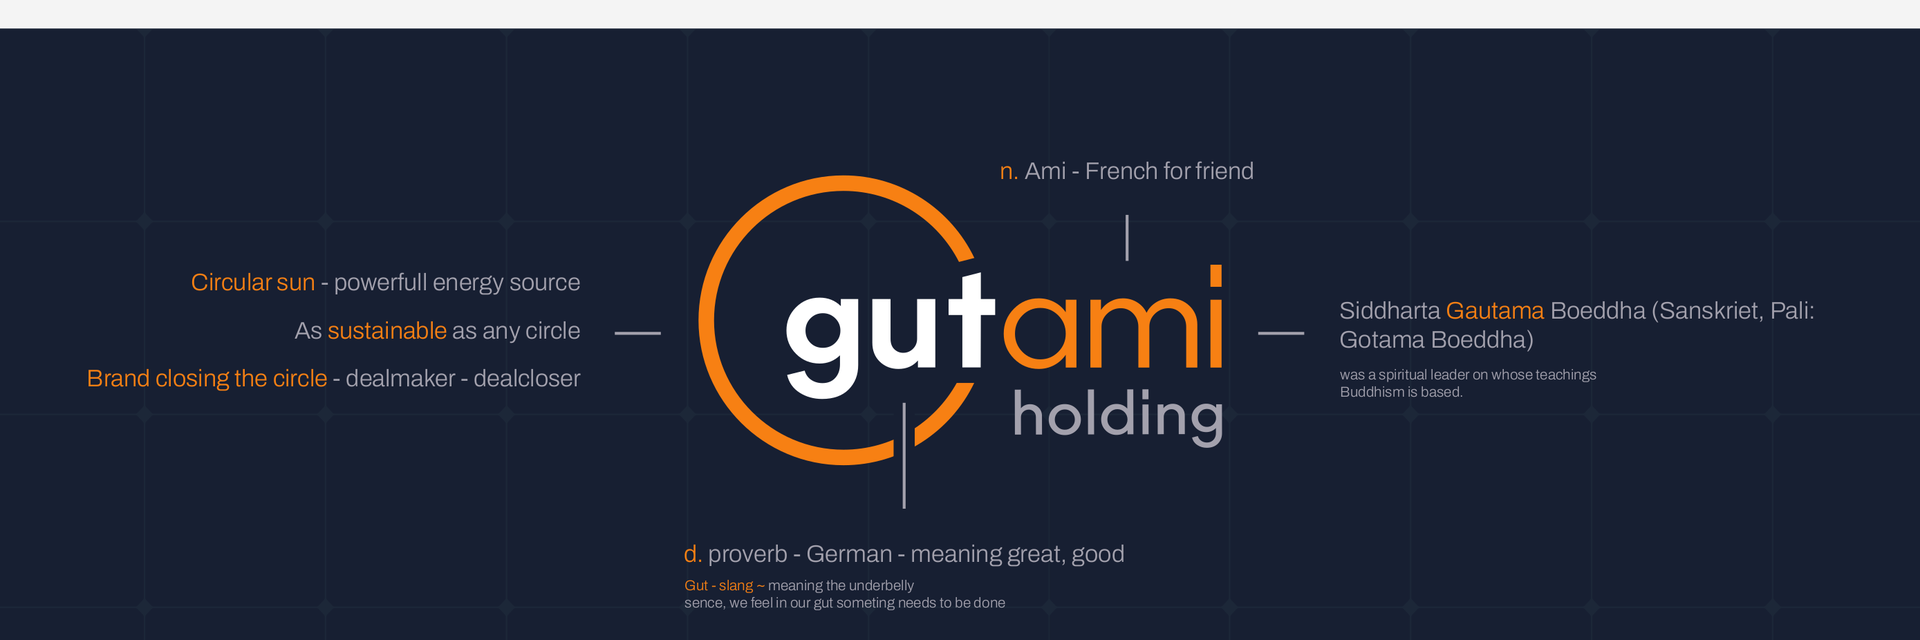 Gutami brand explanation